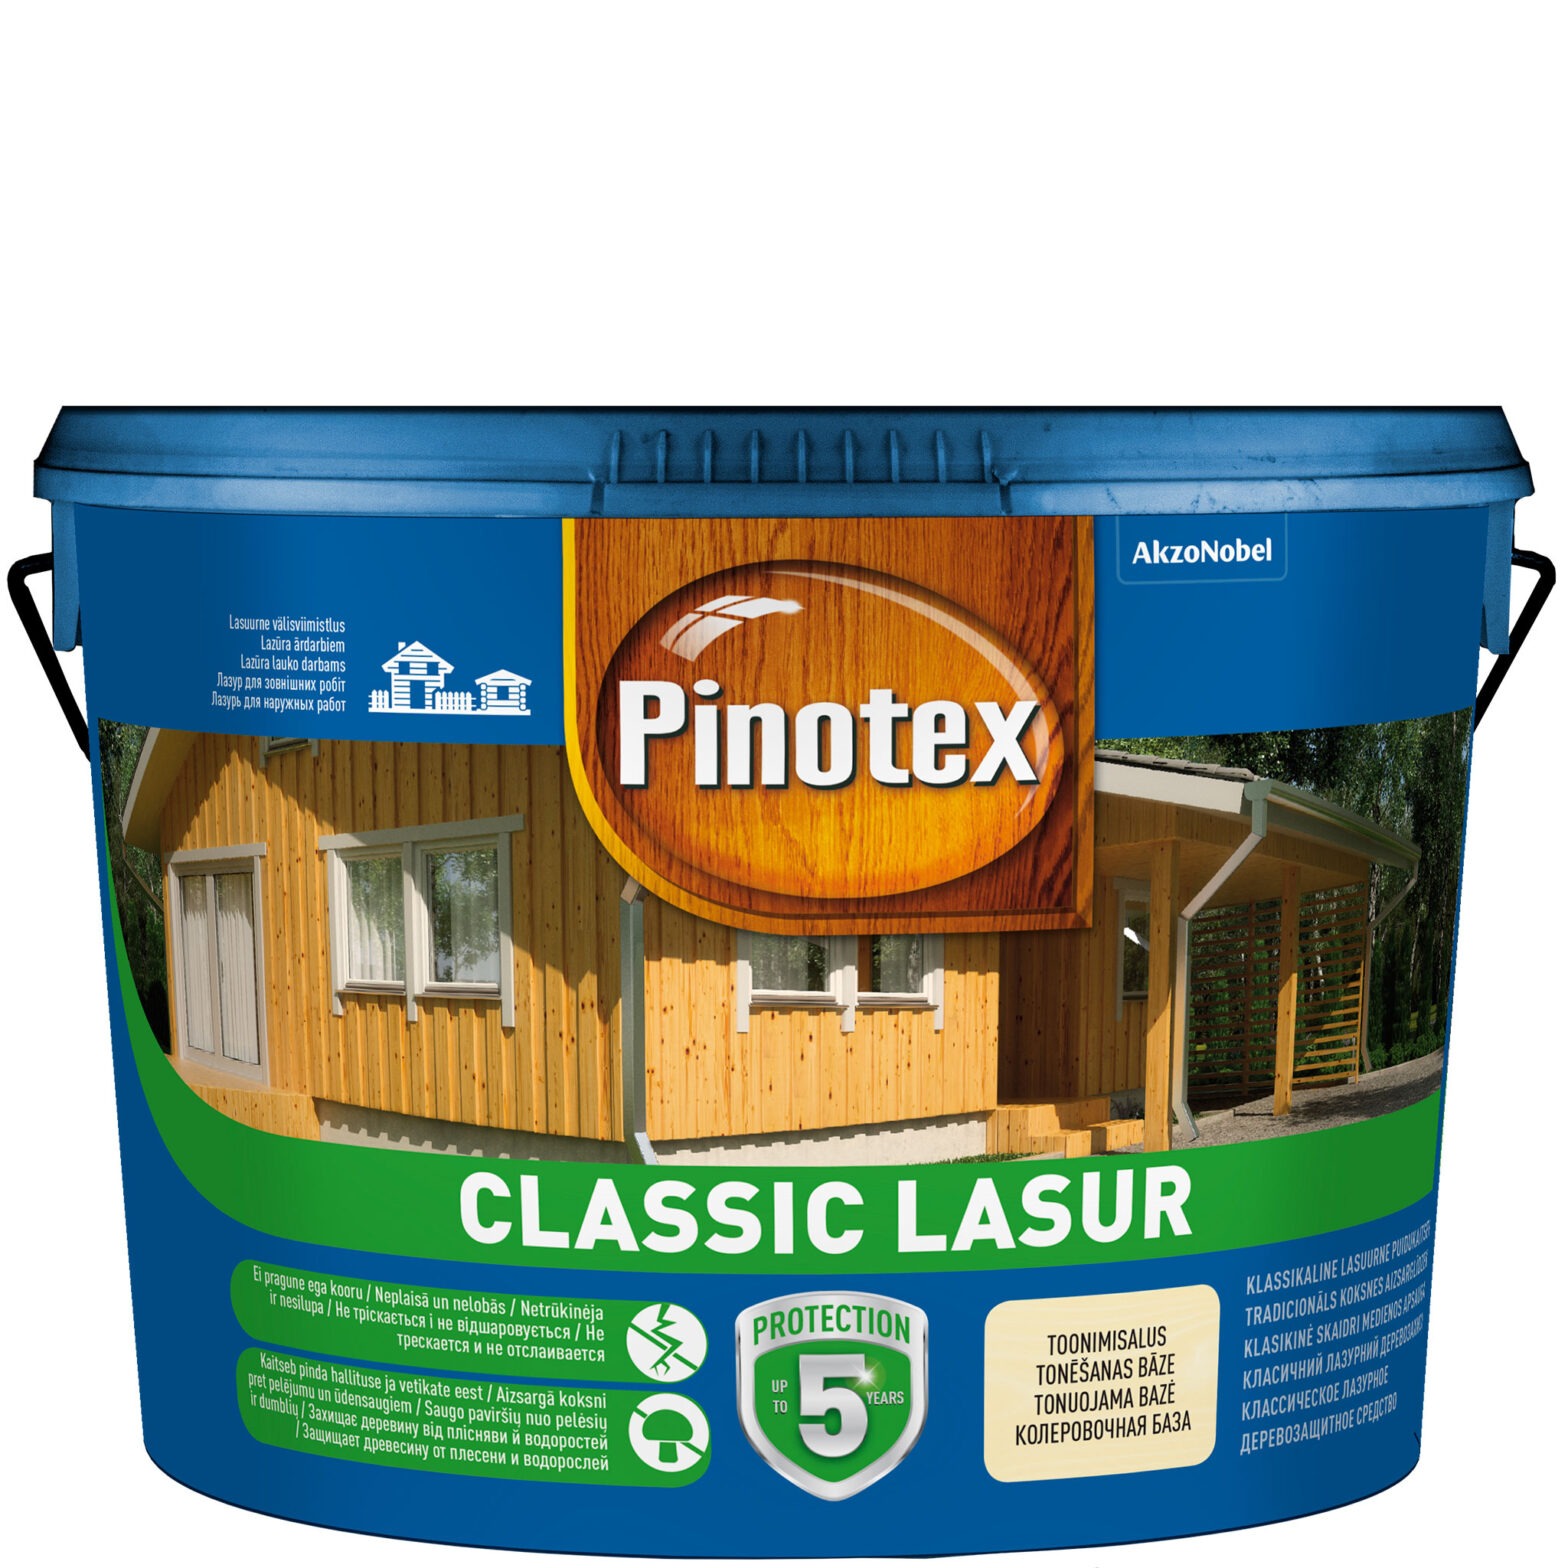 PINOTEX CLASSIC LASUR PALISANDER AE 3L